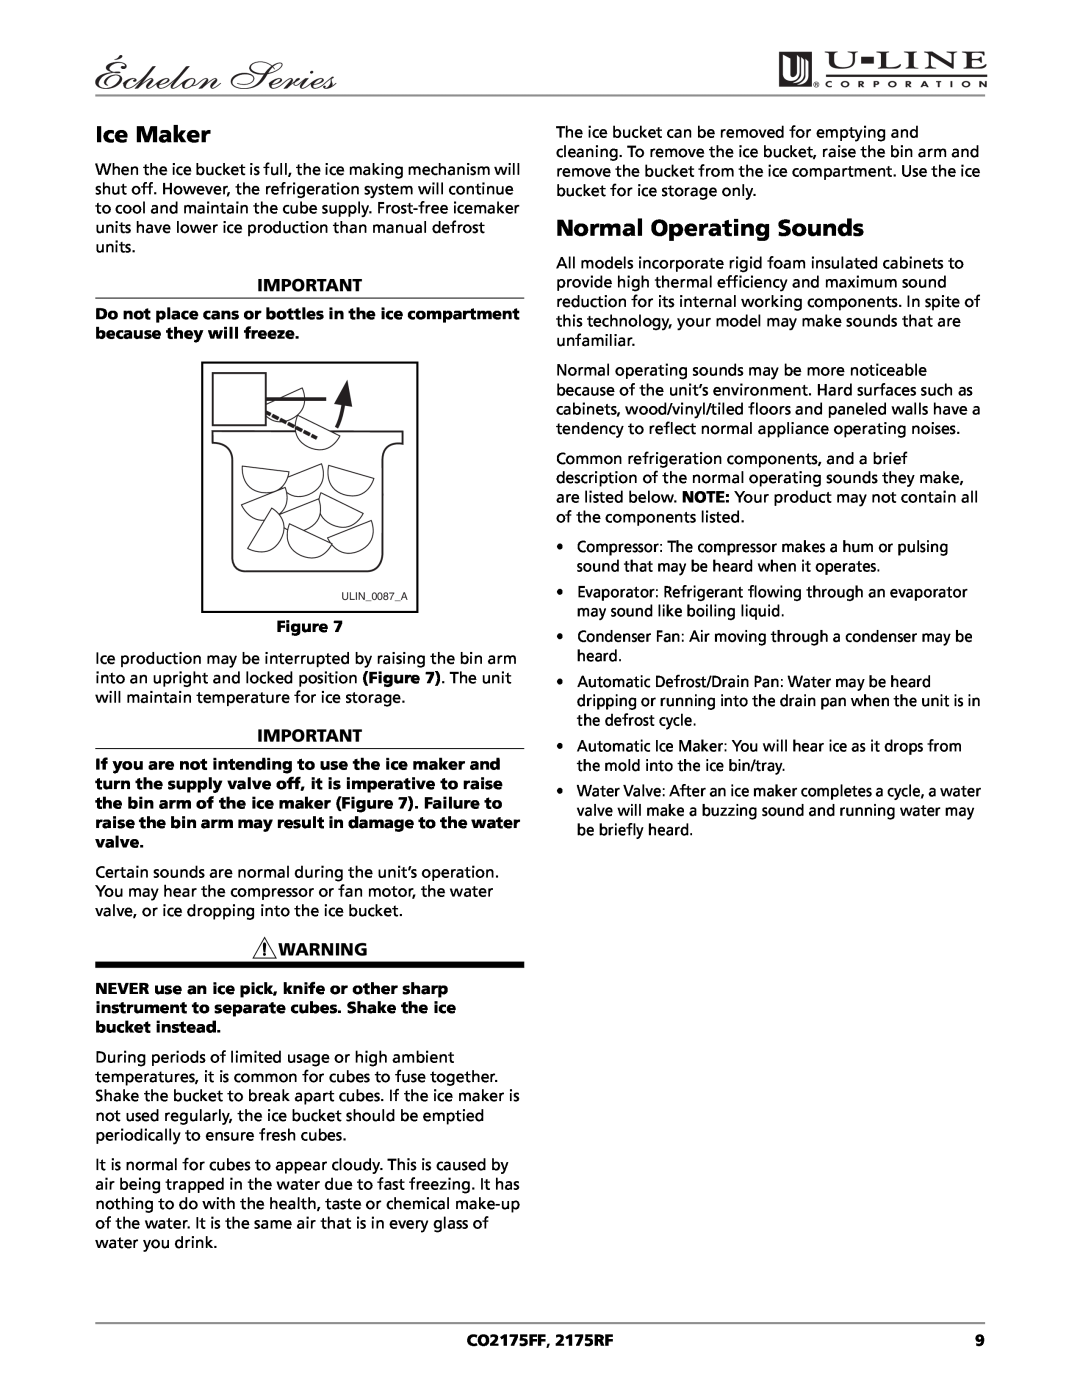 U-Line CO2175RF manual Ice Maker, Normal Operating Sounds, CO2175FF, 2175RF 